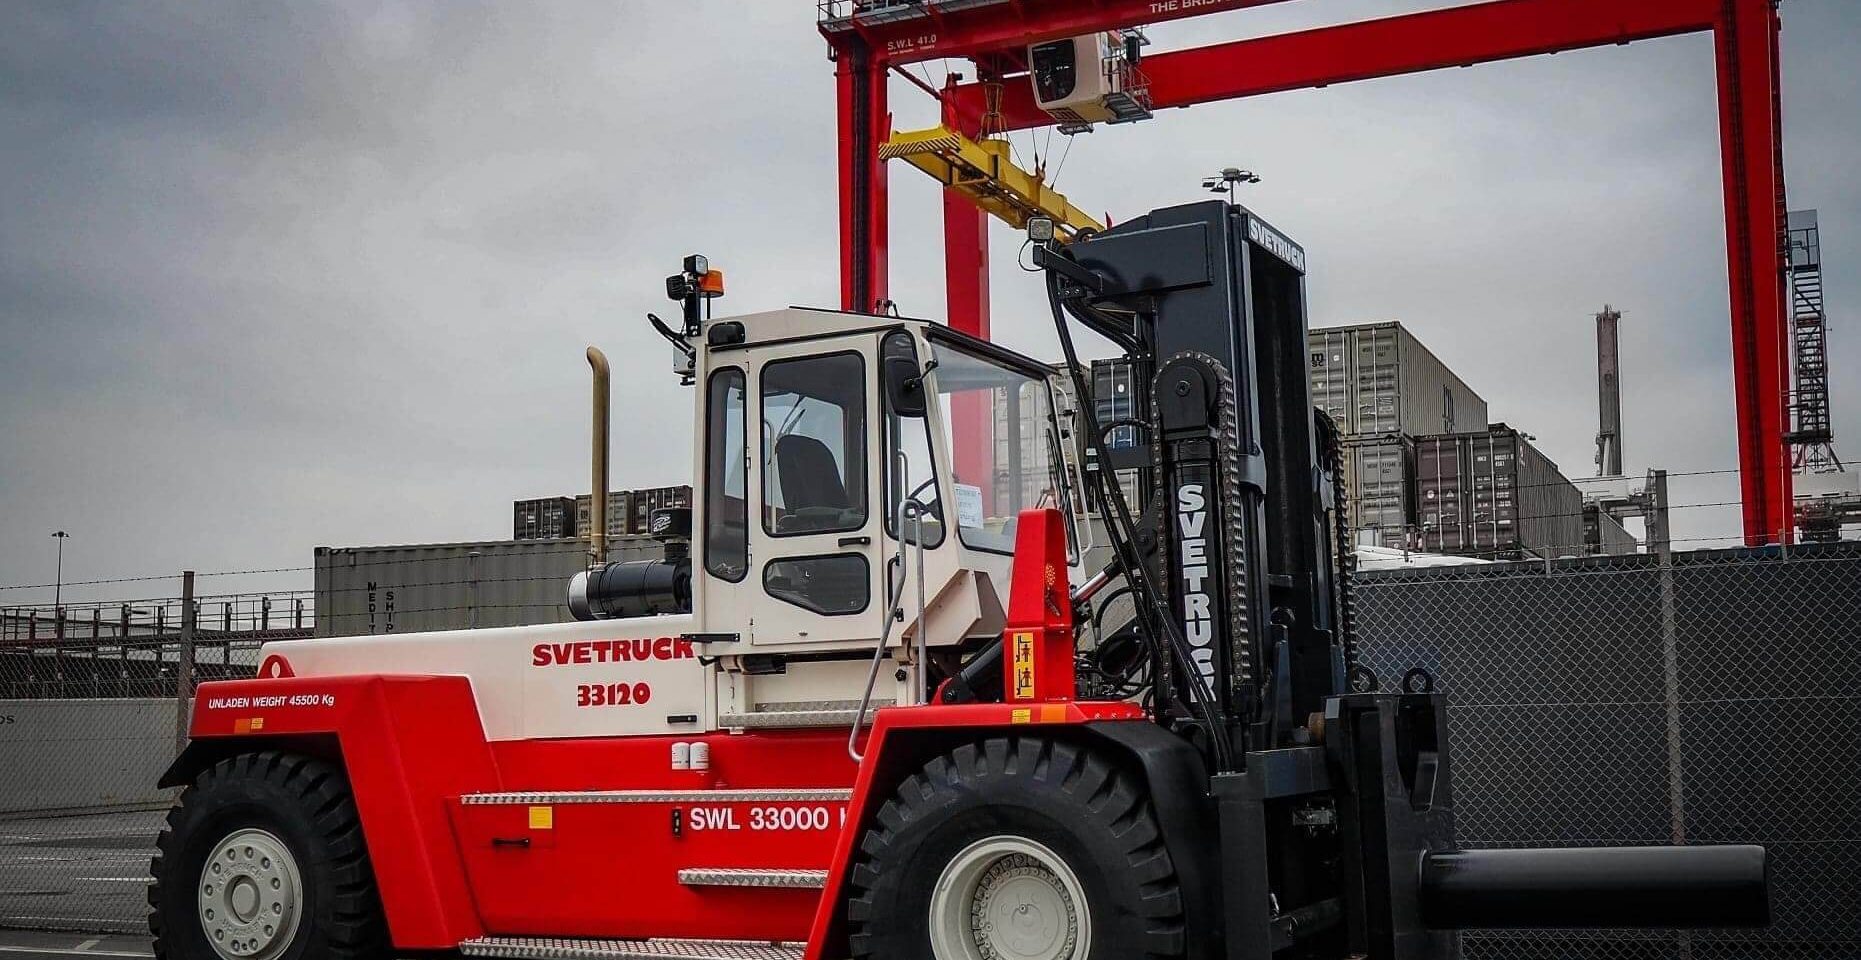 Photo of a 32 - 80 Tonne Svetruck Forklift